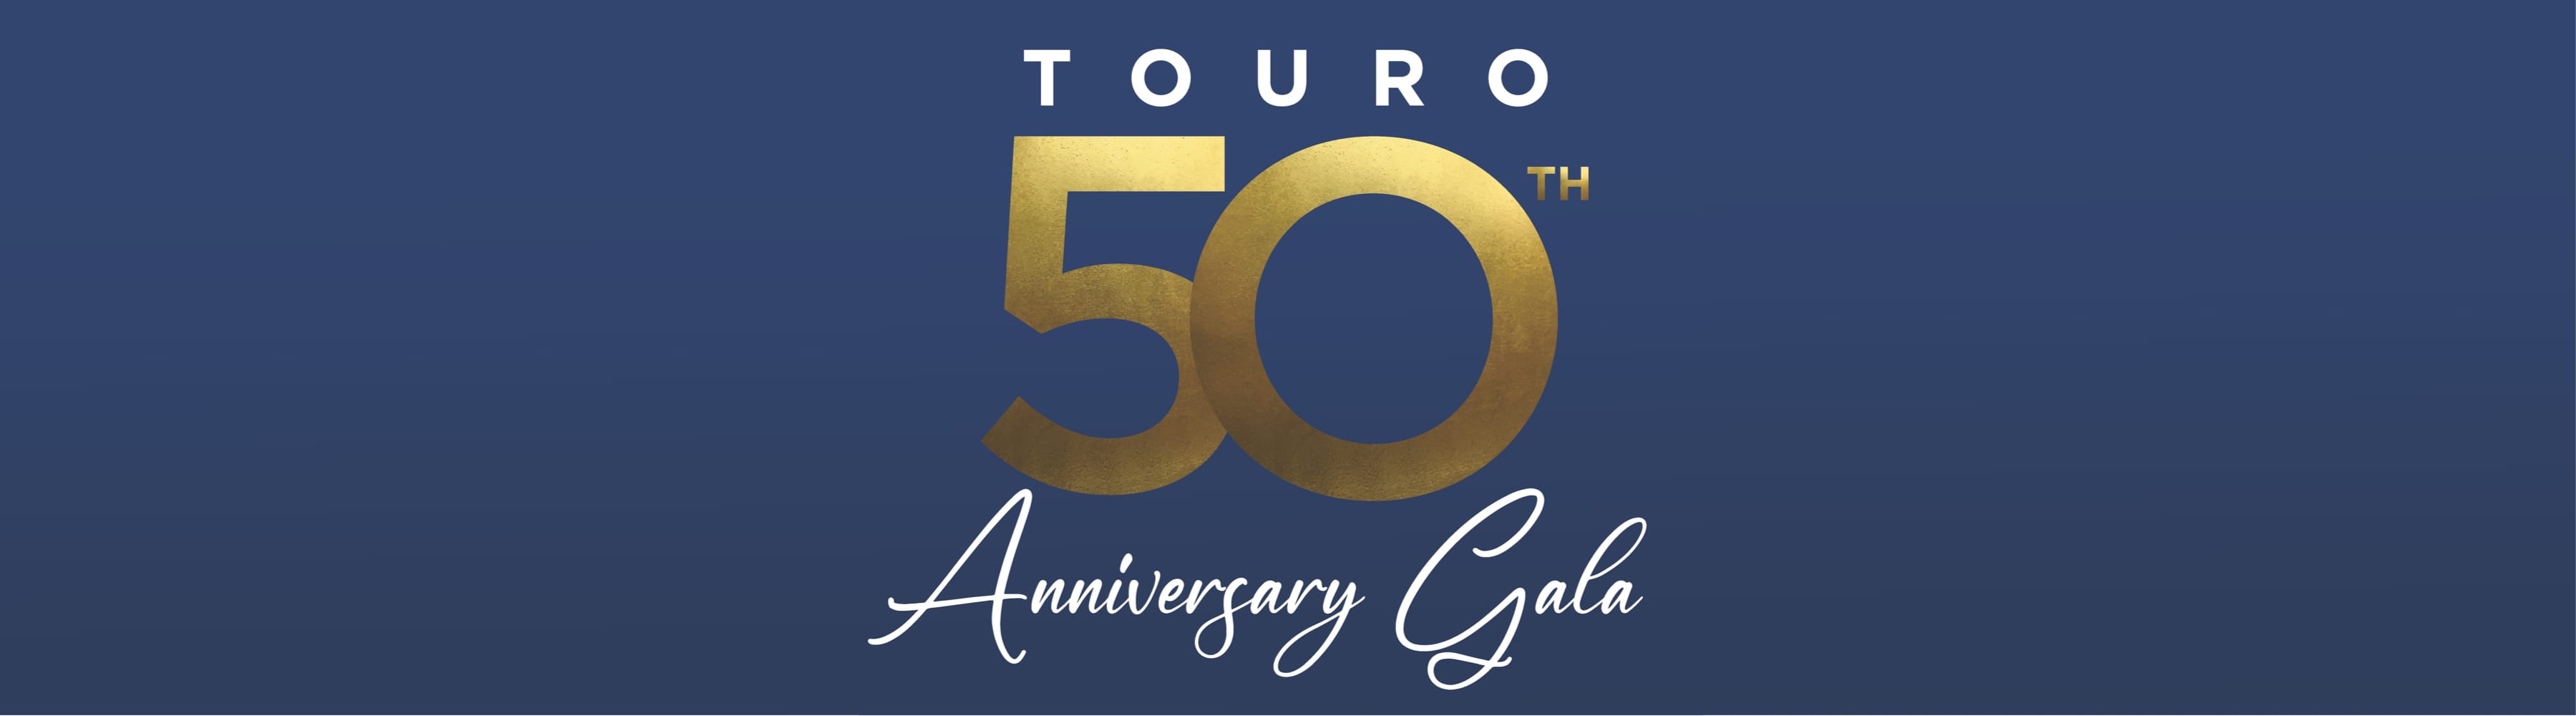 Touro 50th Anniversary Gala